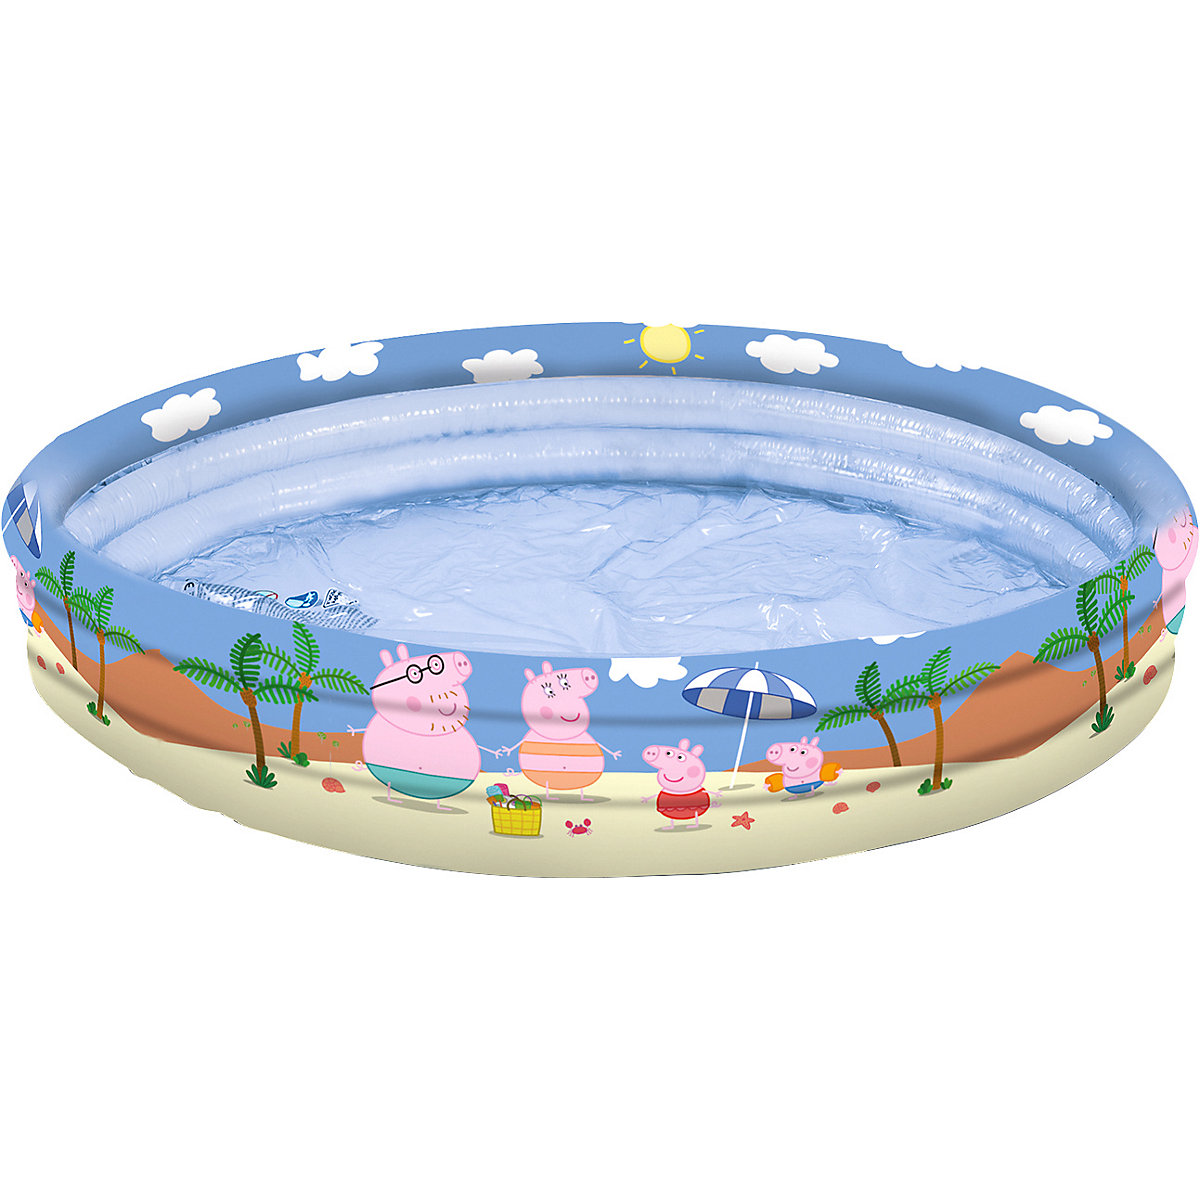 Peppa Pig 3-Ring-Pool 150 cm